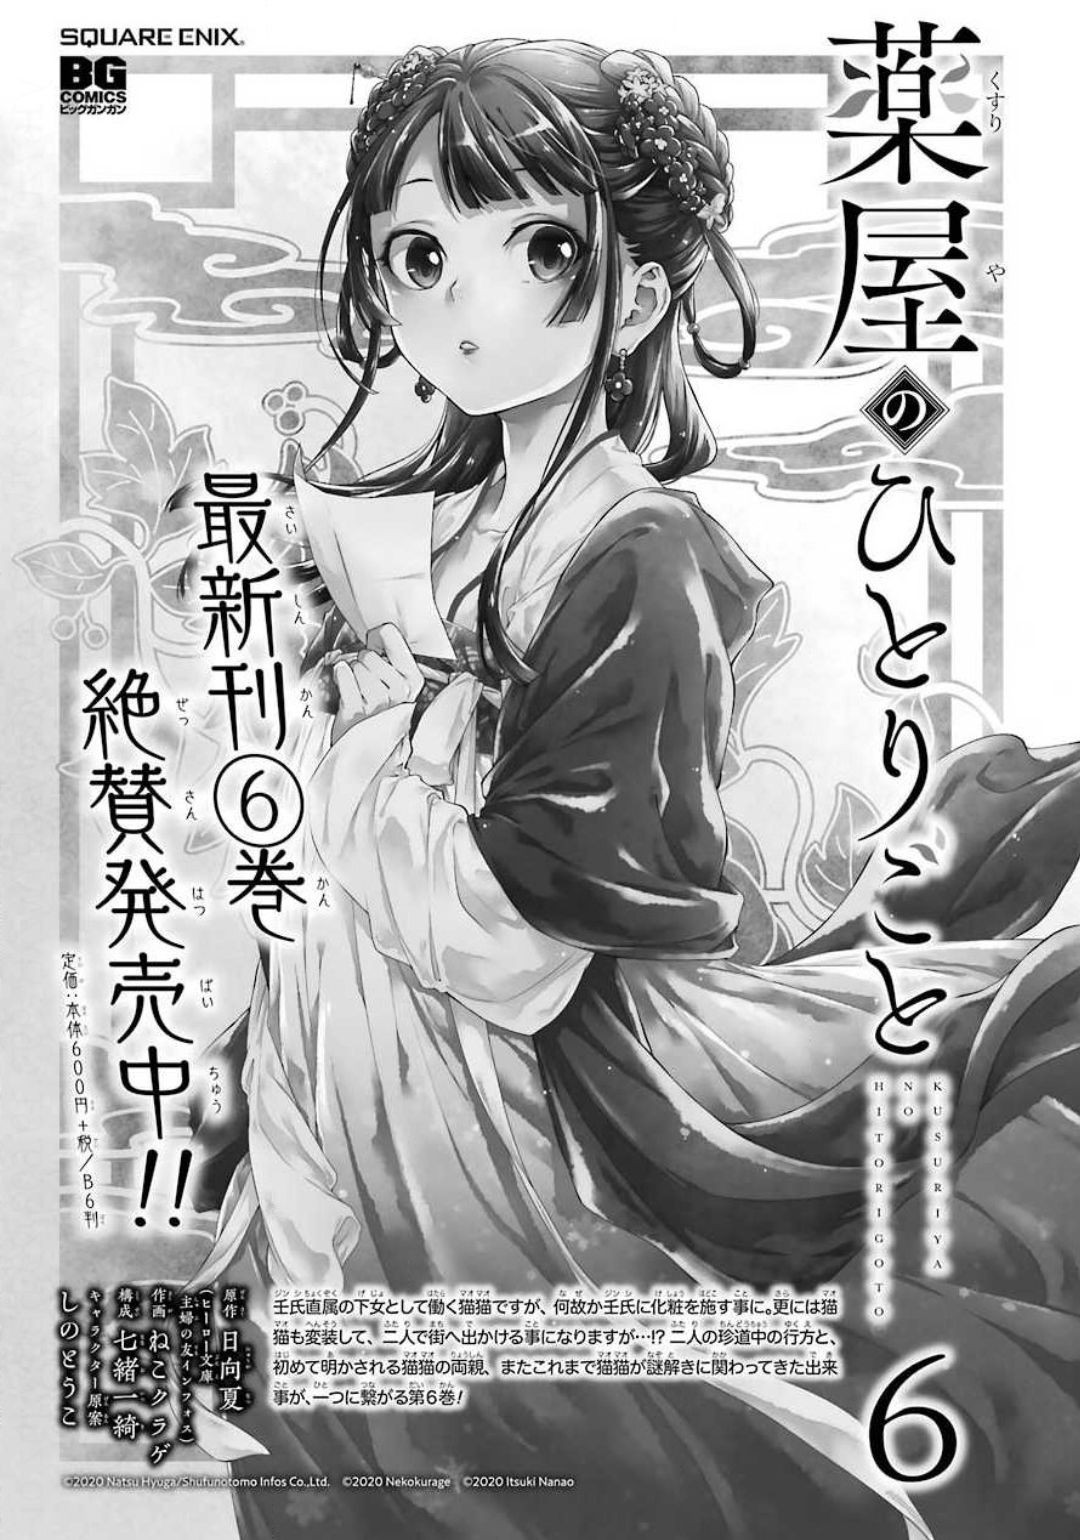 Kusuriya no Hitorigoto - Chapter 35-2 - Page 1